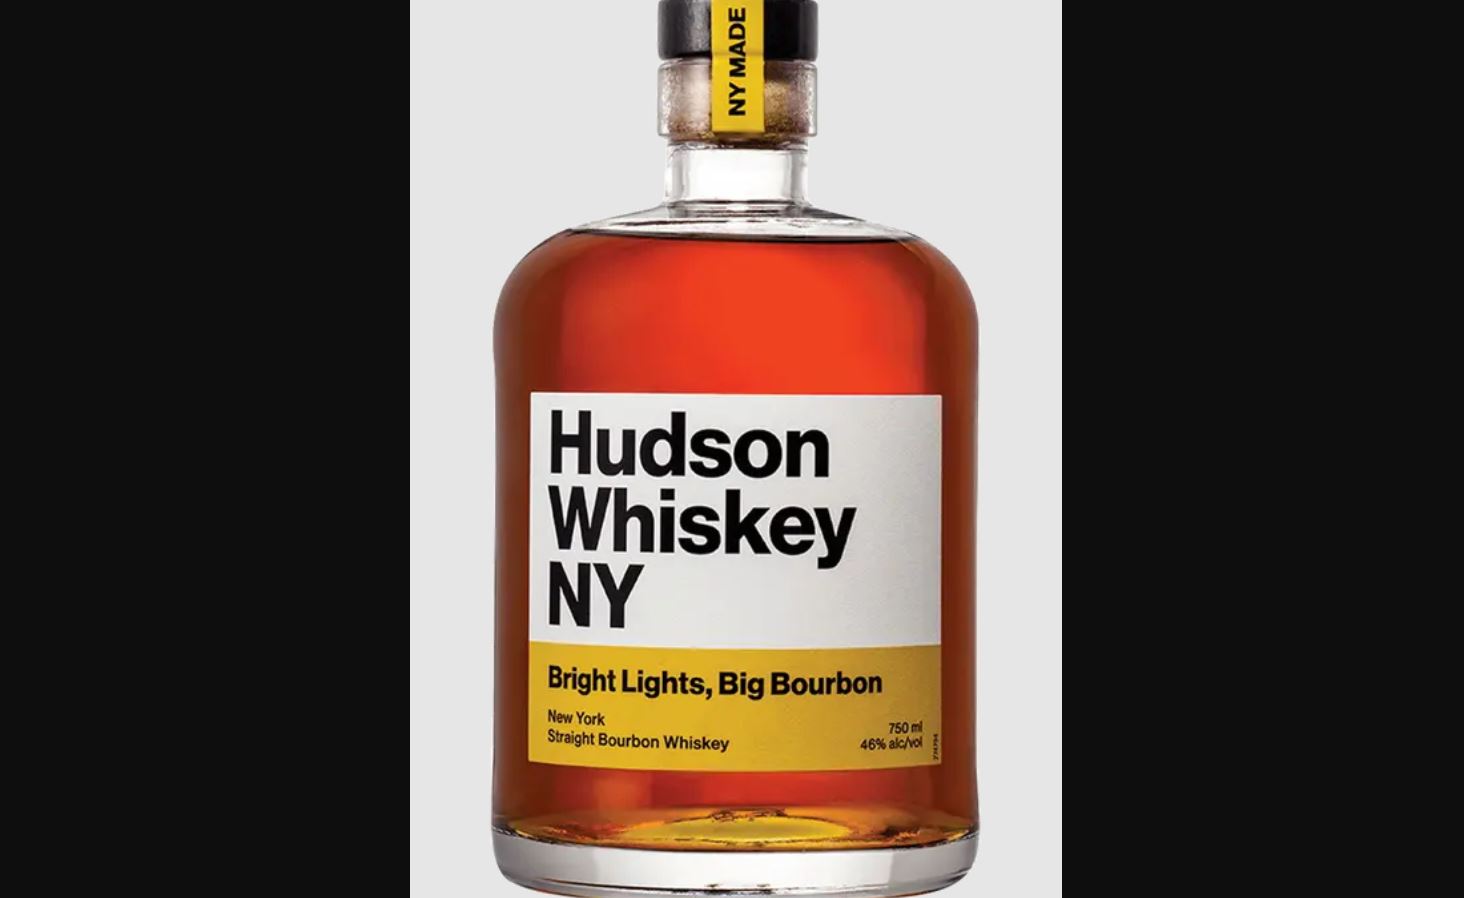 Hudson Whiskey Bright Lights, Big Bourbon